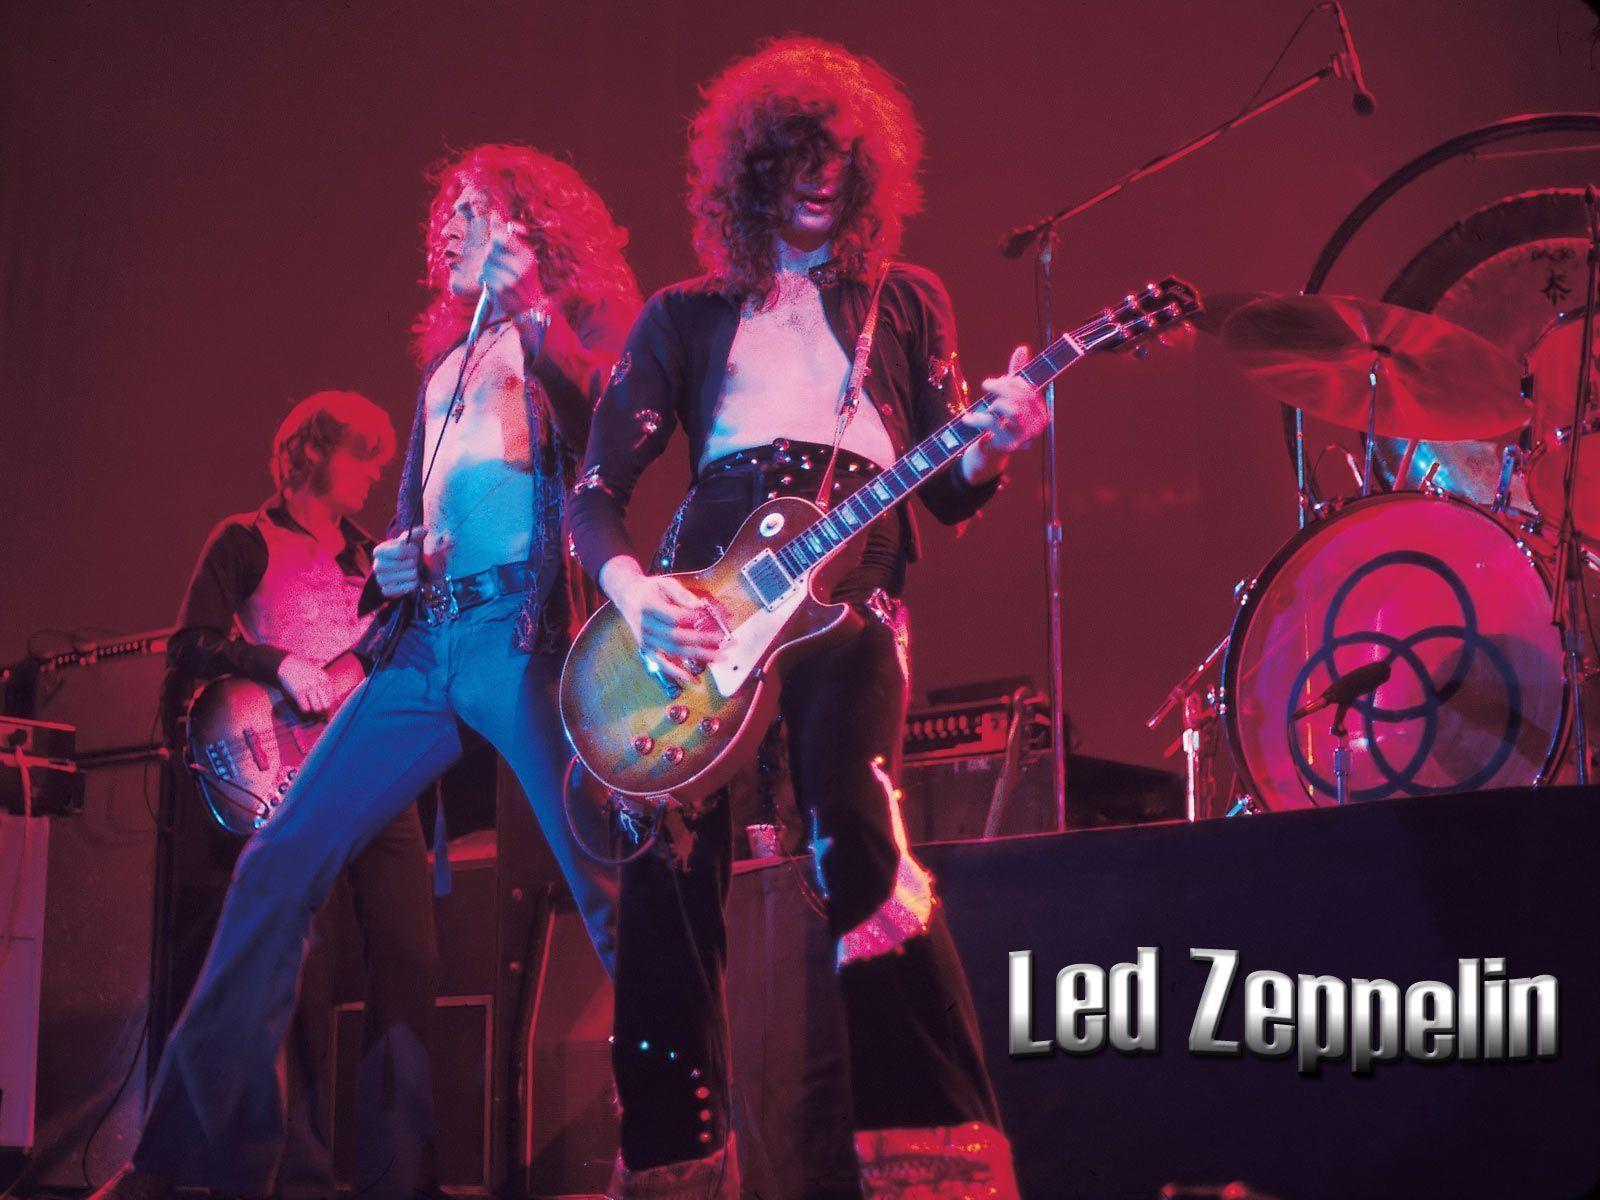 Led Zeppelin Wallpaper. coolstyle wallpaper